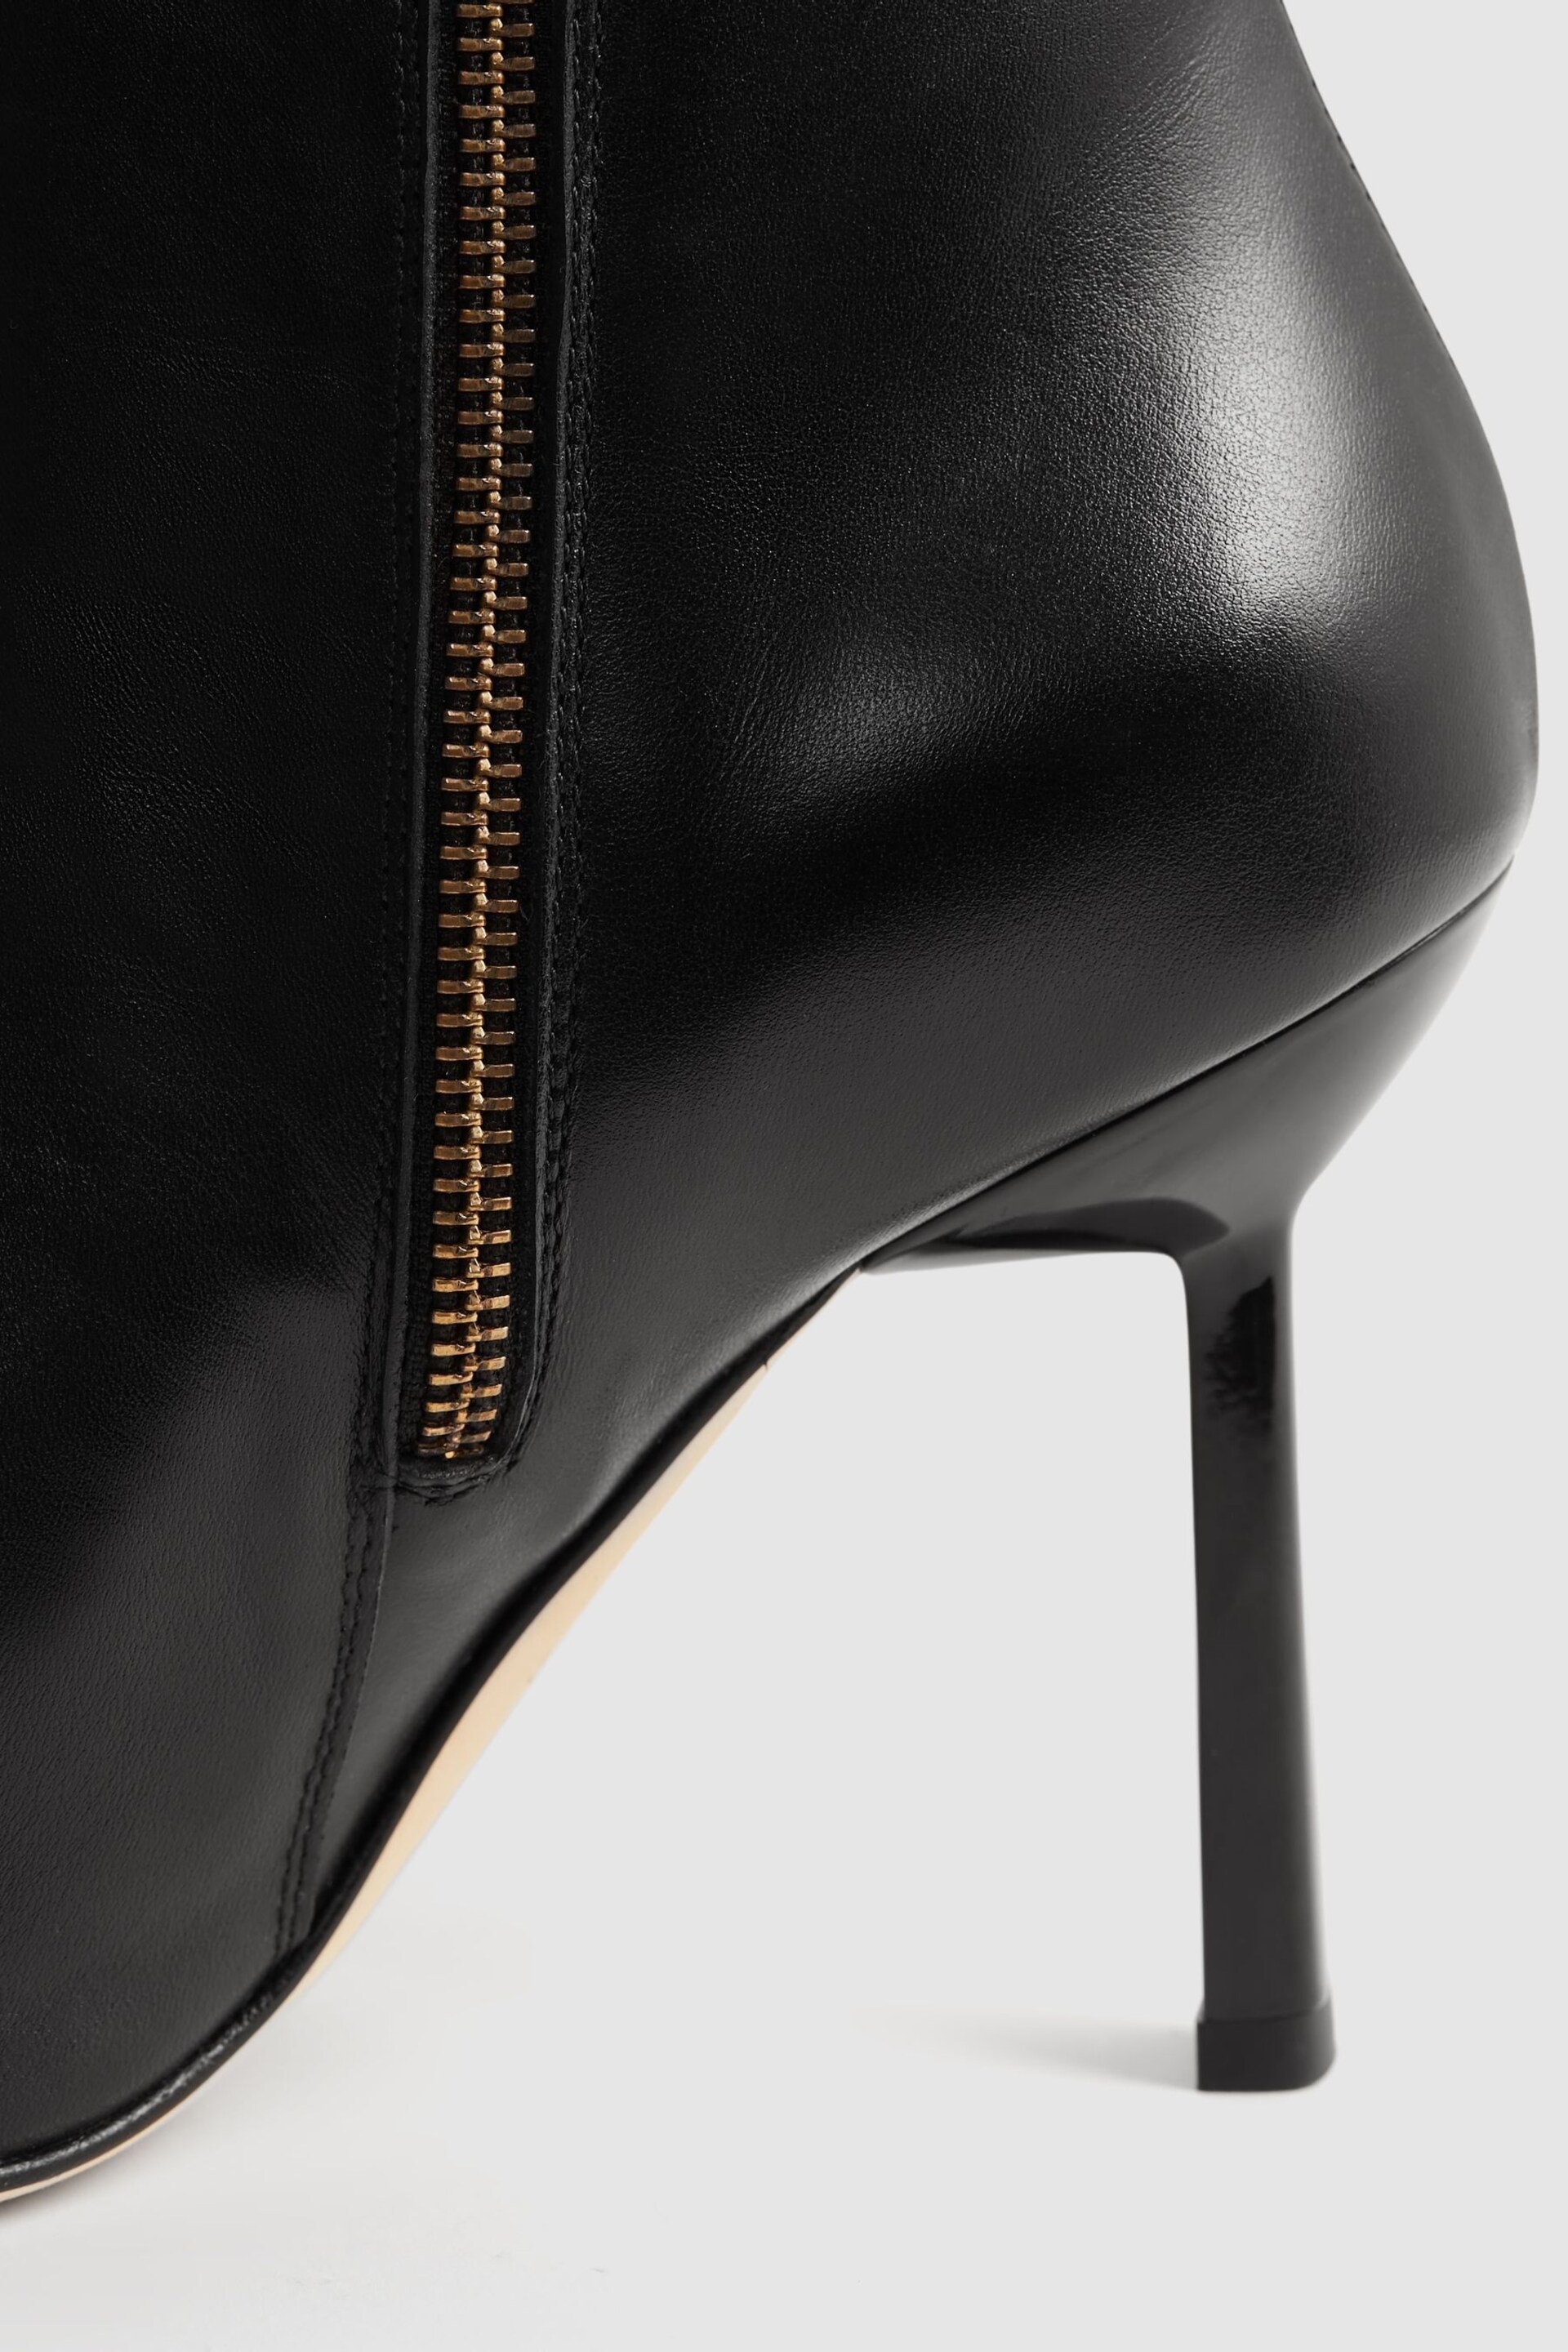 Reiss Black Scarlett Atelier Italian Leather Heeled Ankle Boots - Image 5 of 6